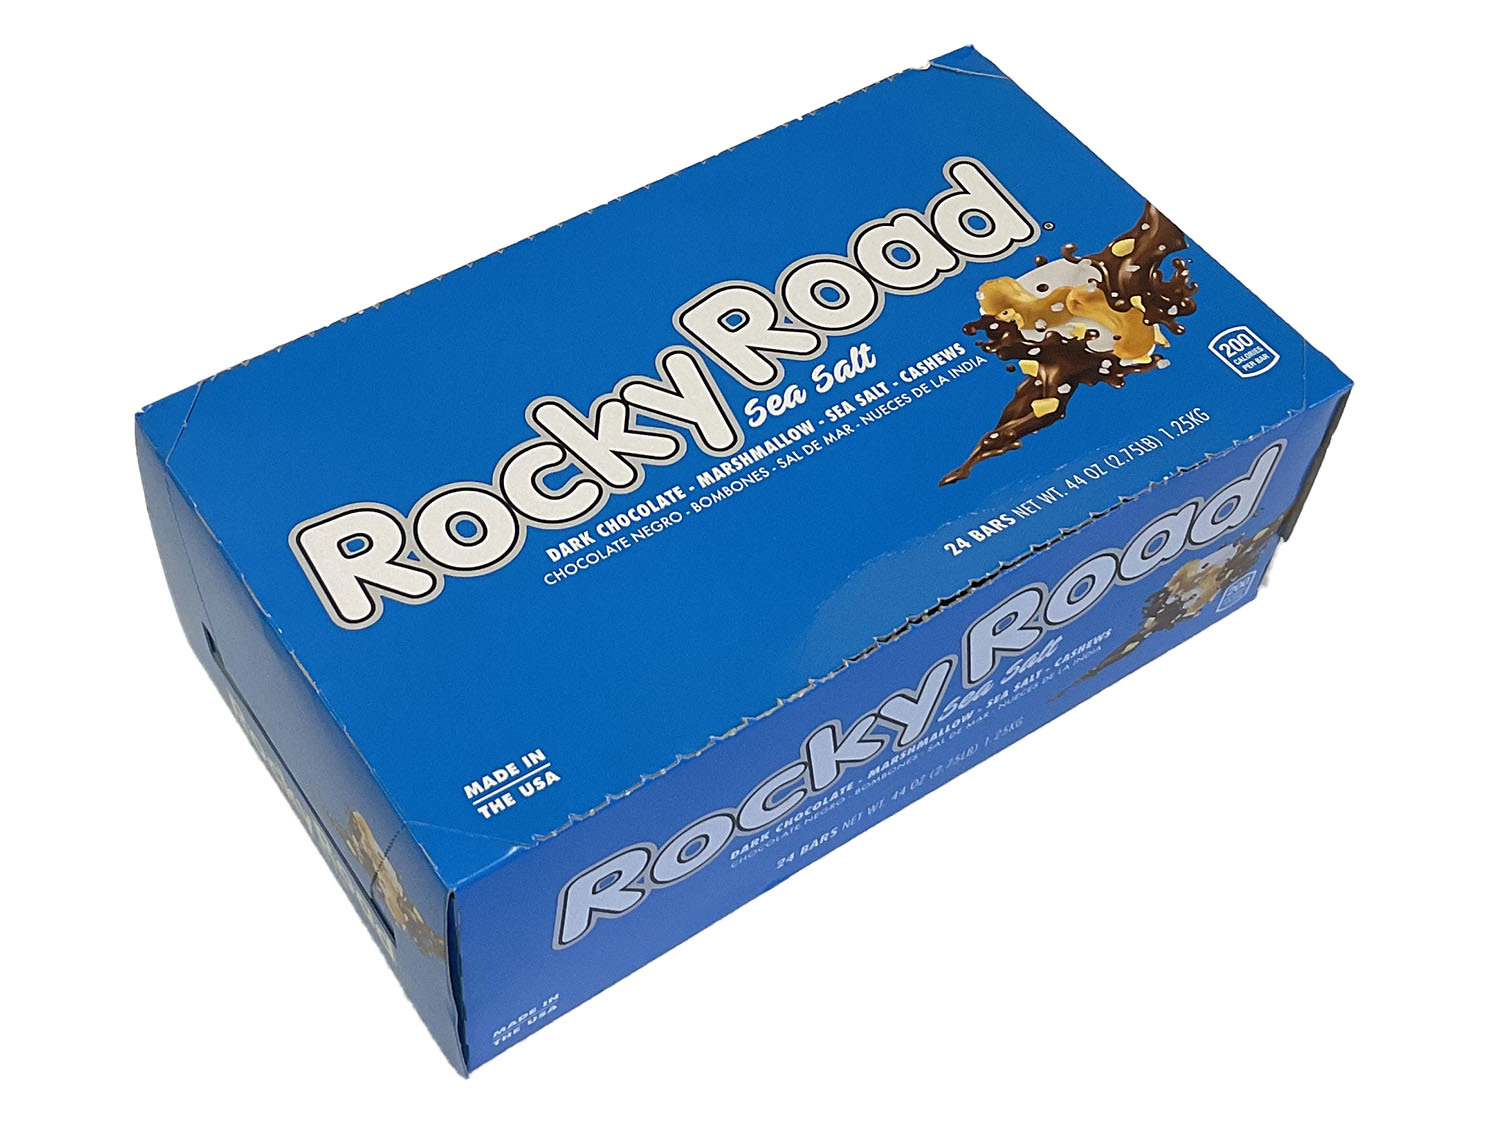 Rocky Road with Sea Salt - 1.82 oz bar - box of 24